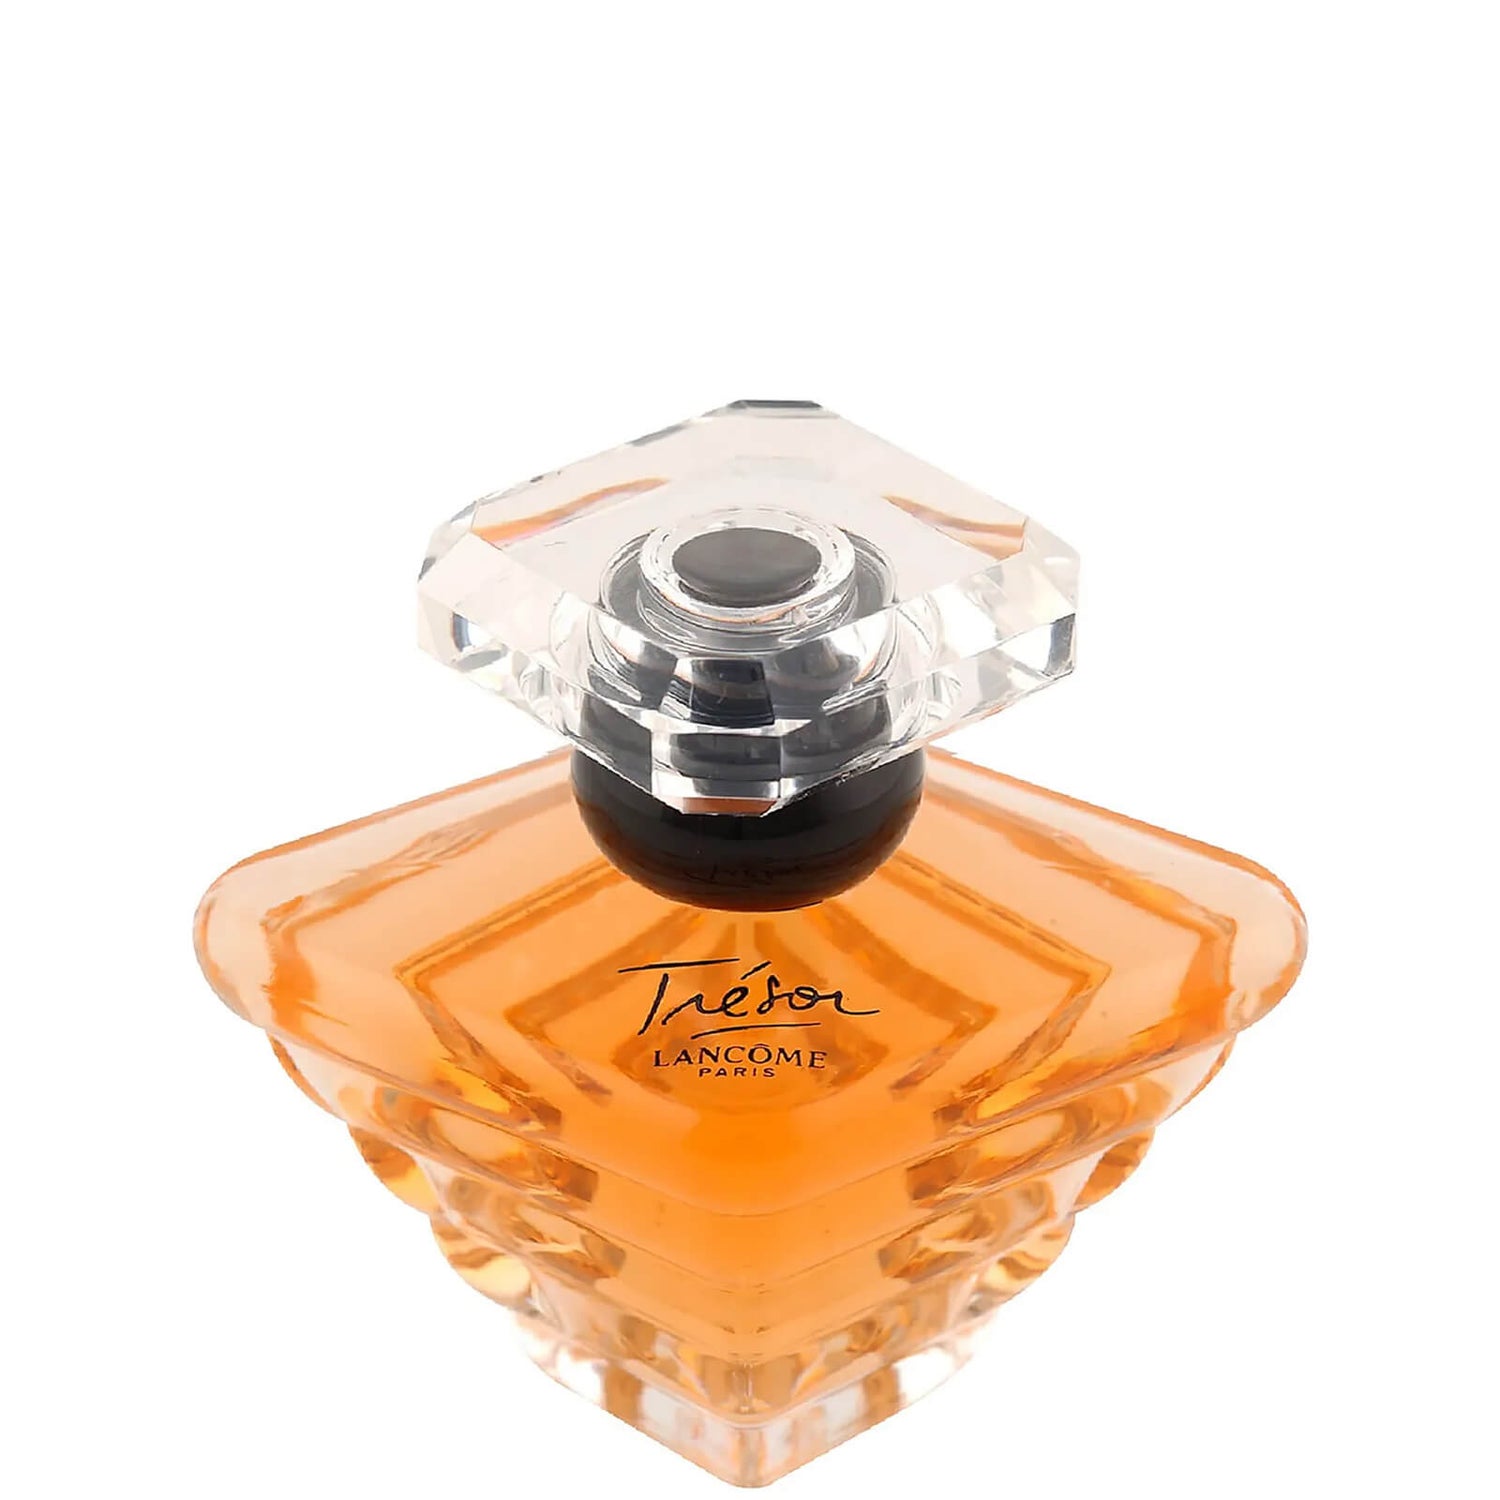 Lancôme Trésor Eau de Parfum Woda perfumowana 30 ml